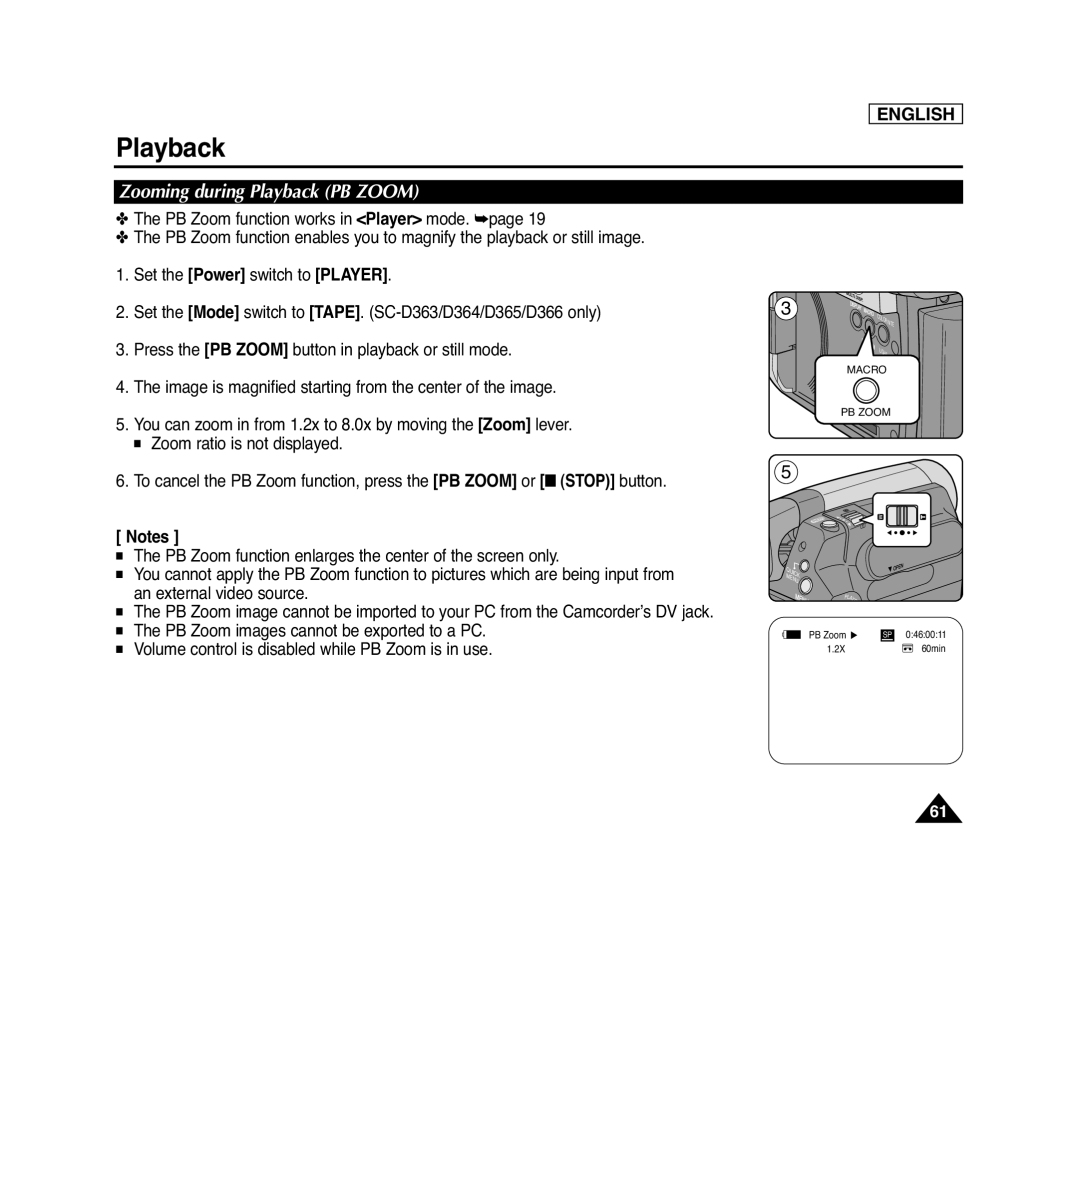 Samsung SC-D366, SC-D263, SC-D364, SC-D362 manual Zooming during Playback PB ZOOM, English, Macro Pb Zoom 